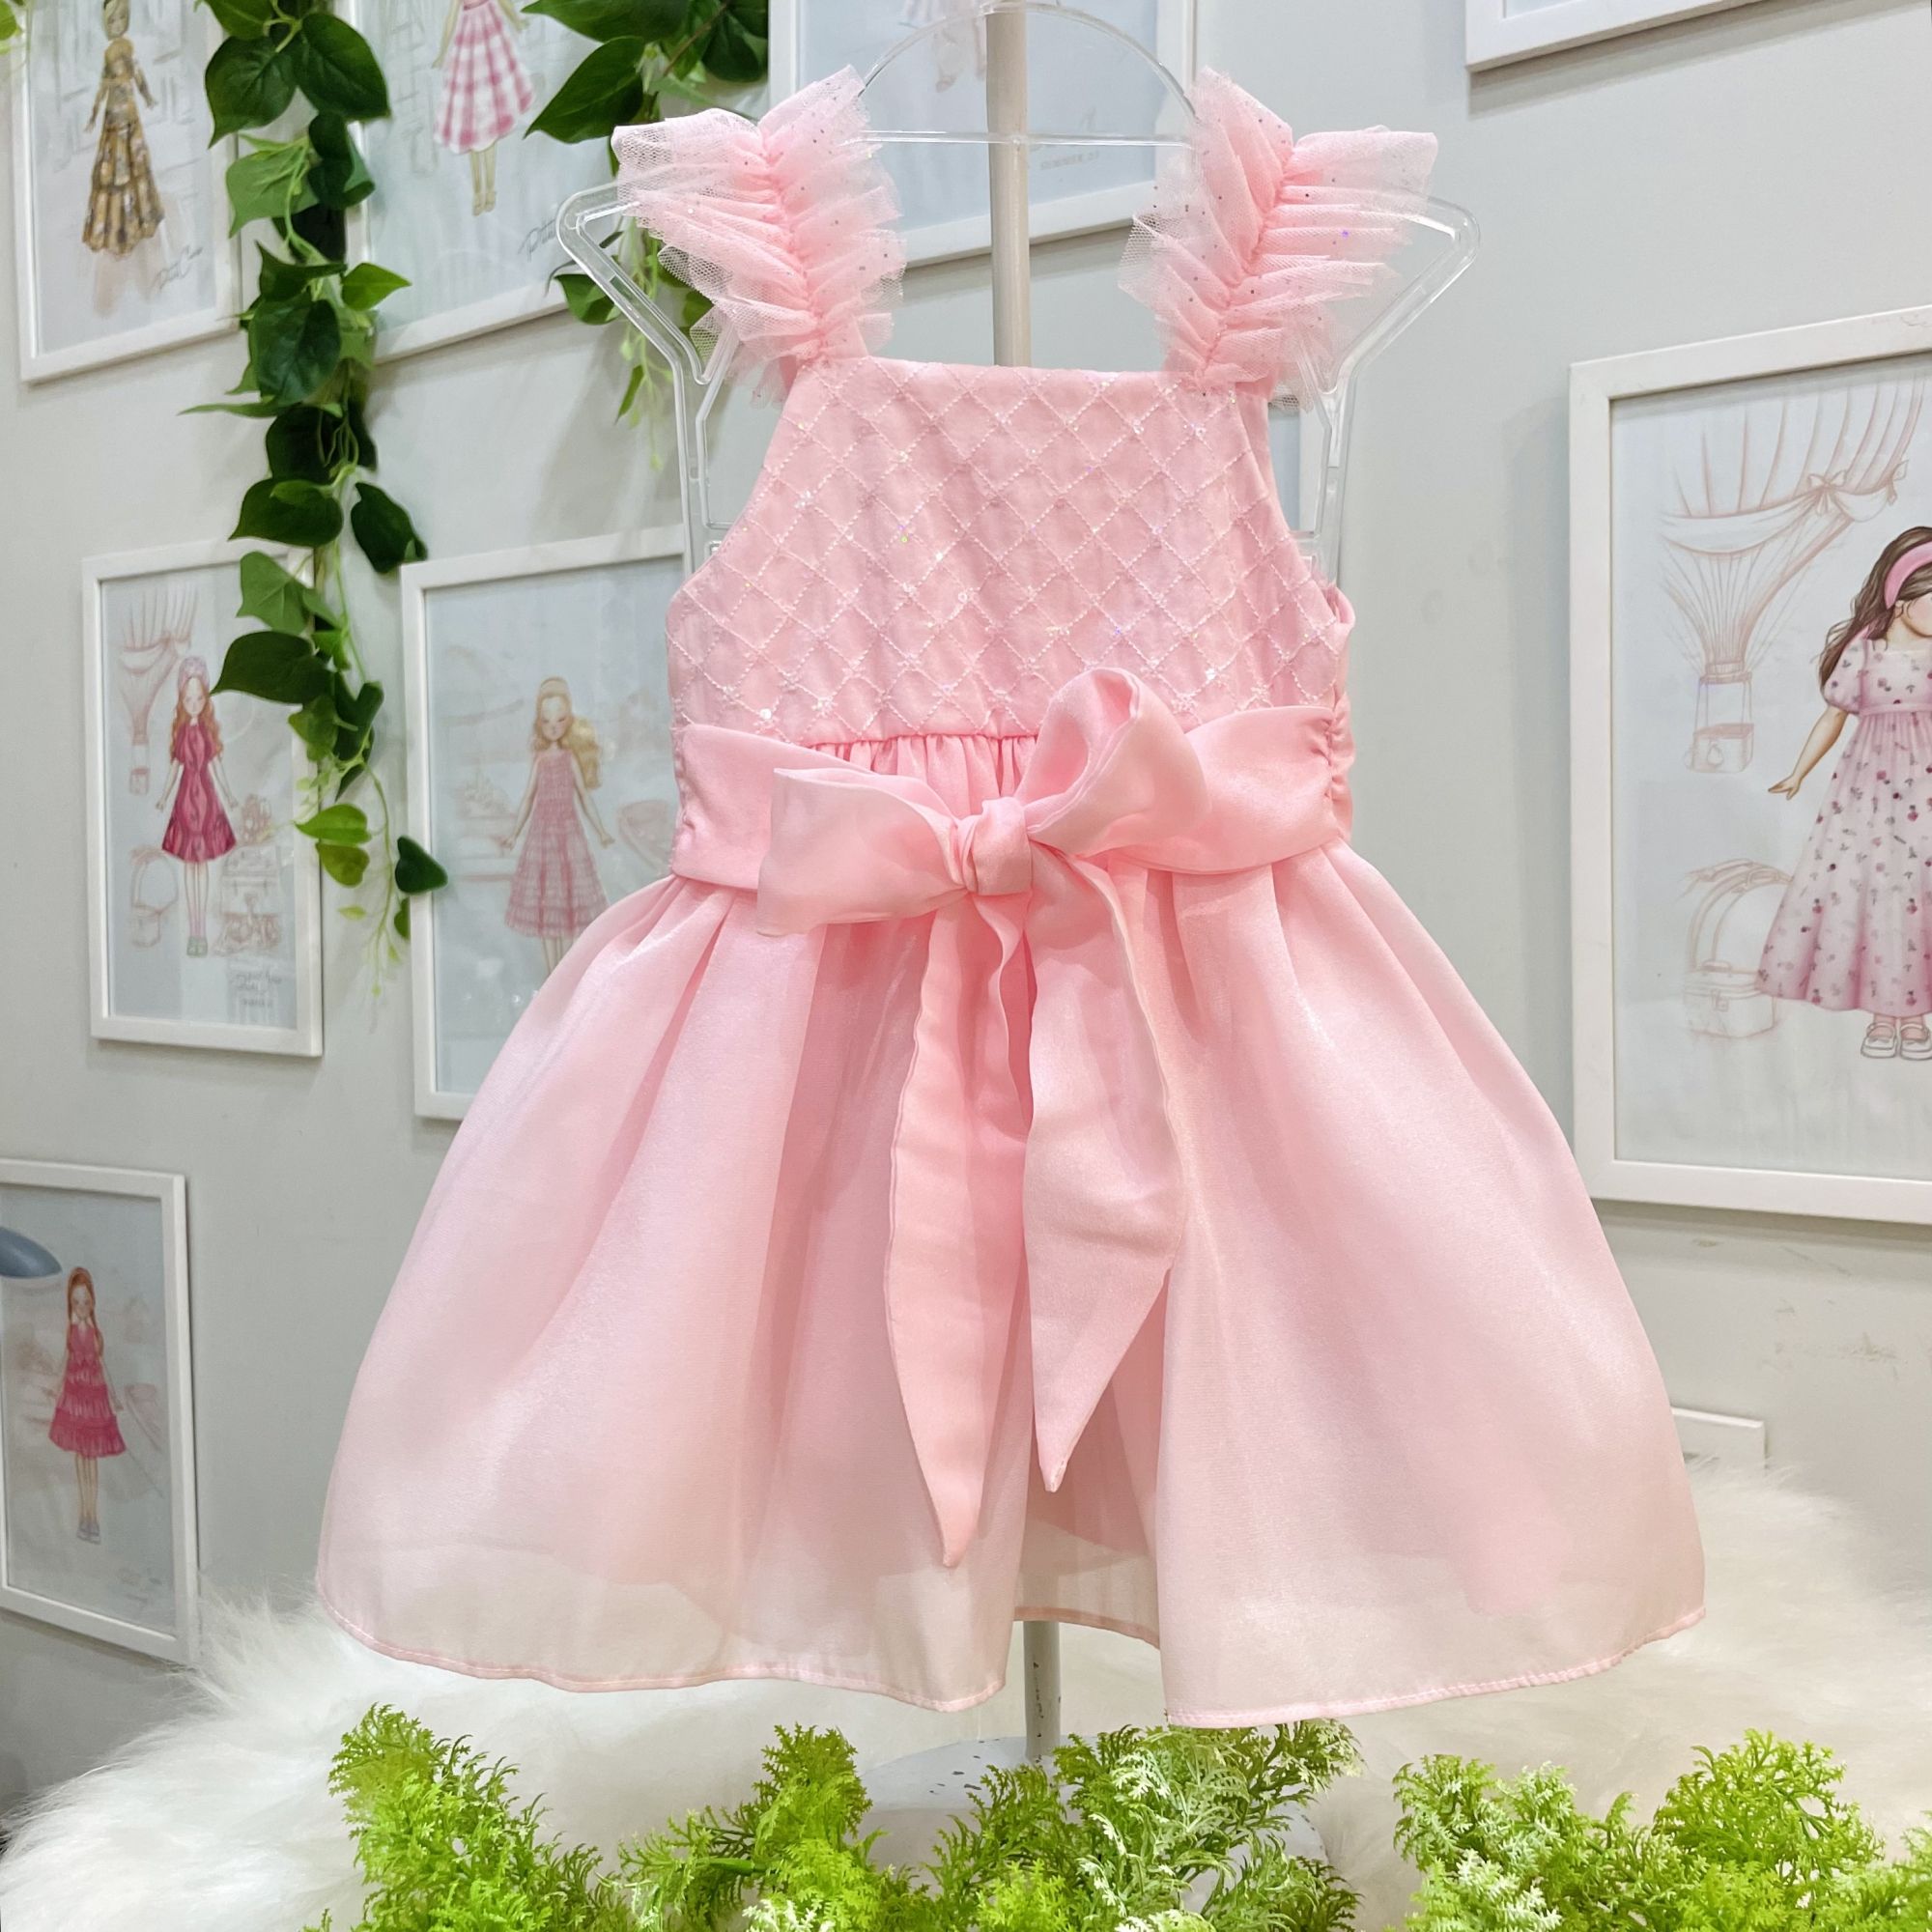 Vestido Infantil de Festa Petit Cherie Rosé Bordado Xadrez Paetês Alcinha Tule Brilhos Cinto